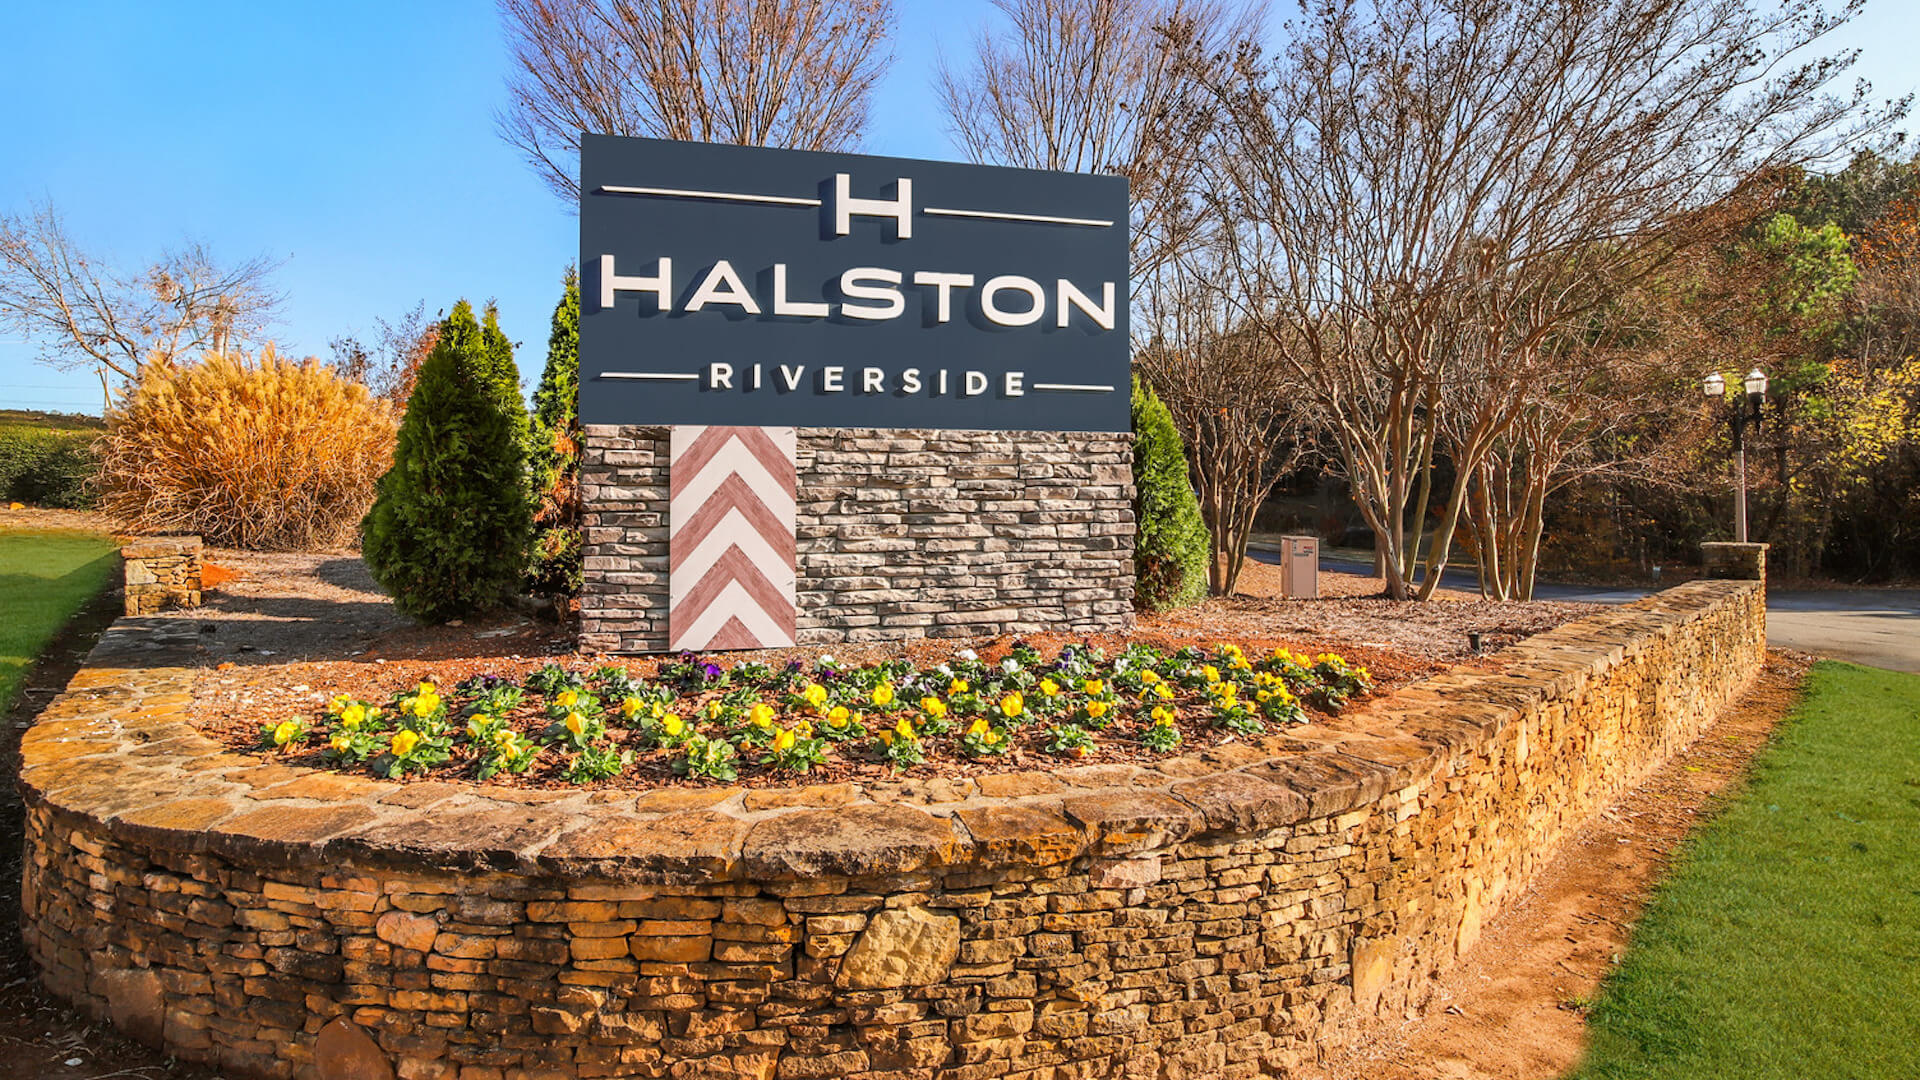 Halston Riverside